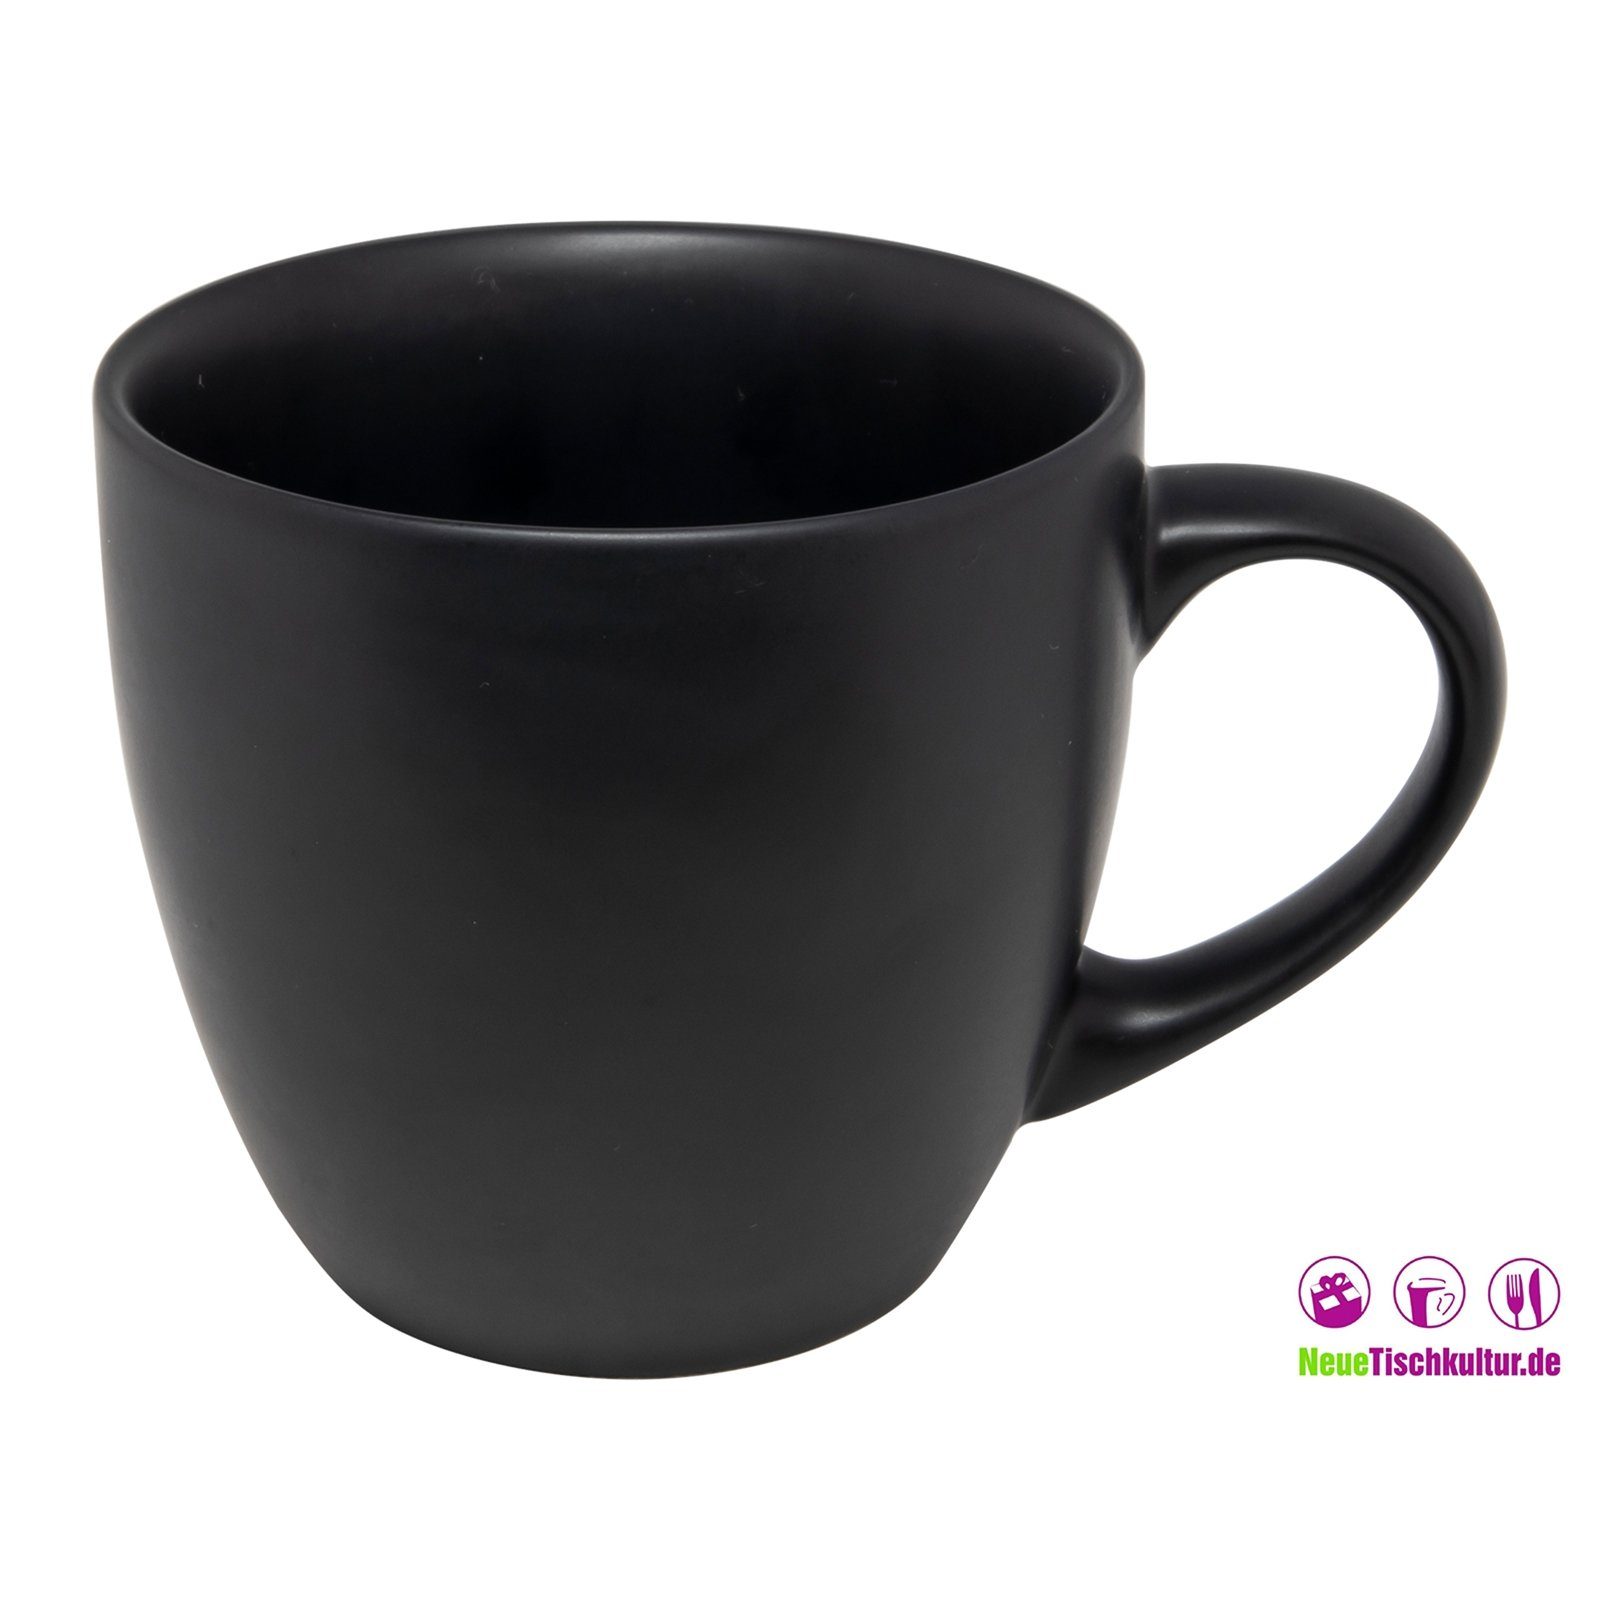 Neuetischkultur Tasse Tasse 2er Set Black Keramik, Teetasse Matt, Kaffeetasse